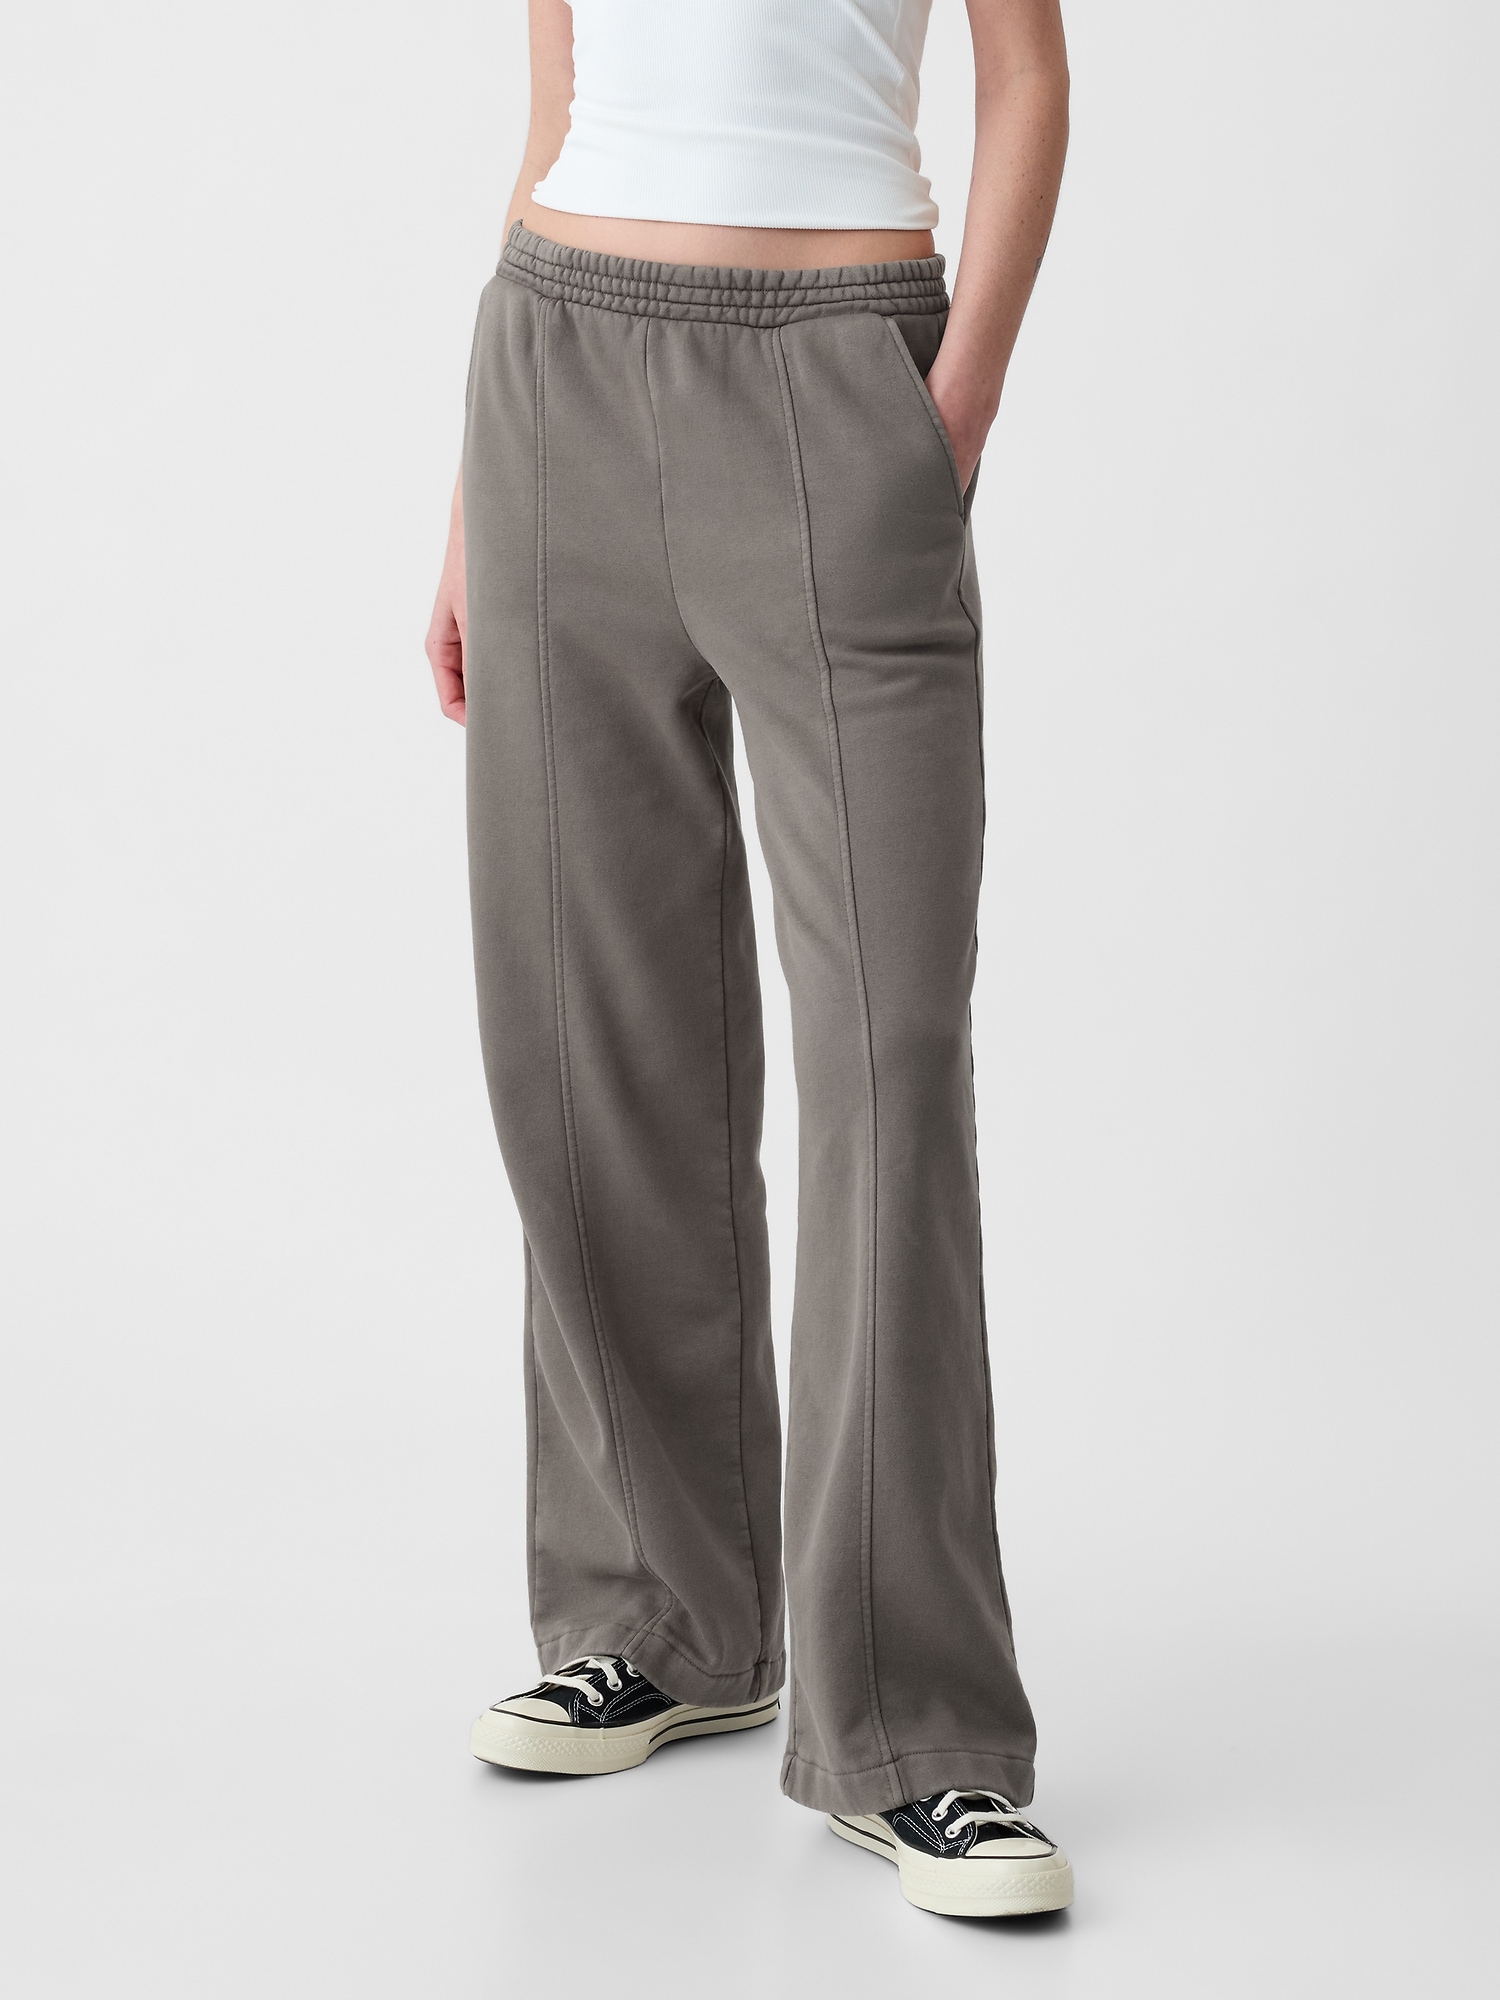 Scoop Women's Wide Leg Satin Pants, 27.5'' Inseam, Sizes XS-XXL 